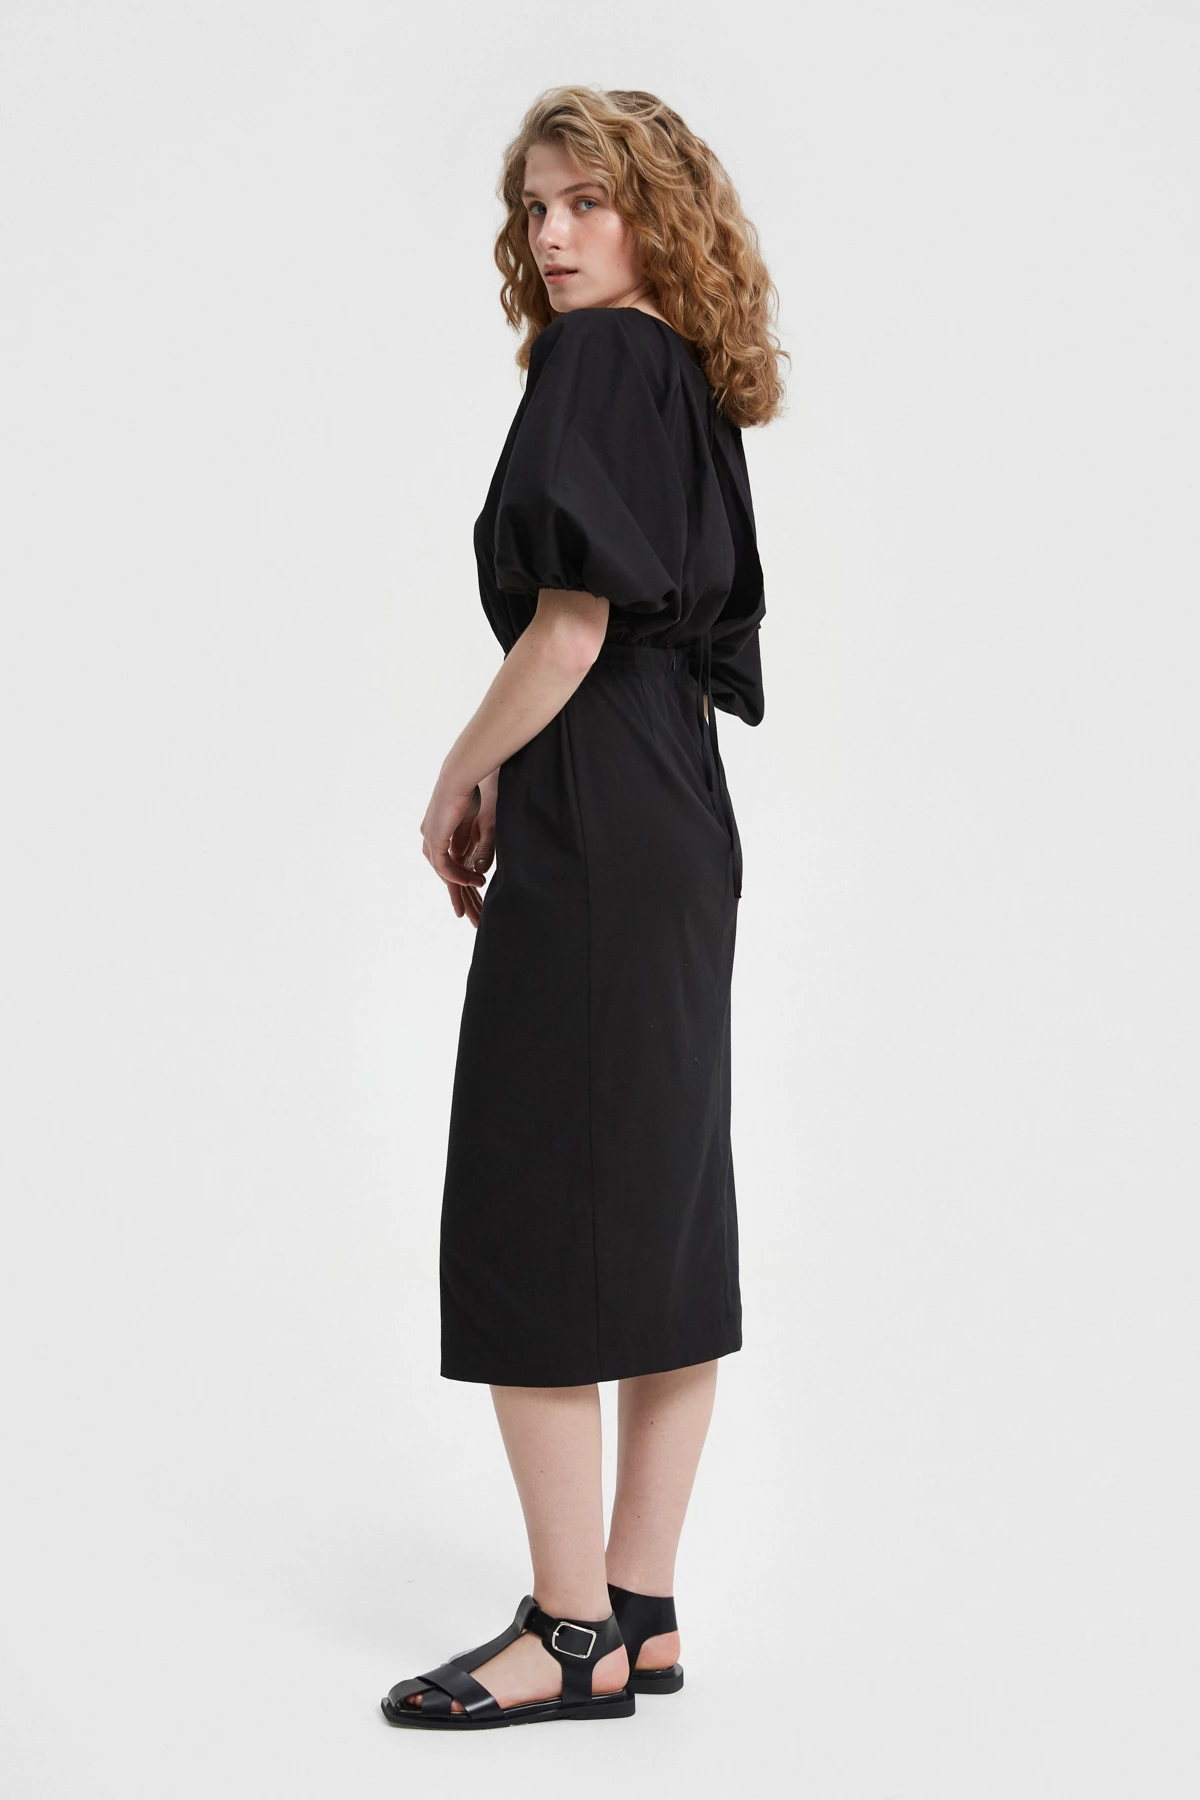 Black midi dress with voluminous top made of shirt fabric , photo 3